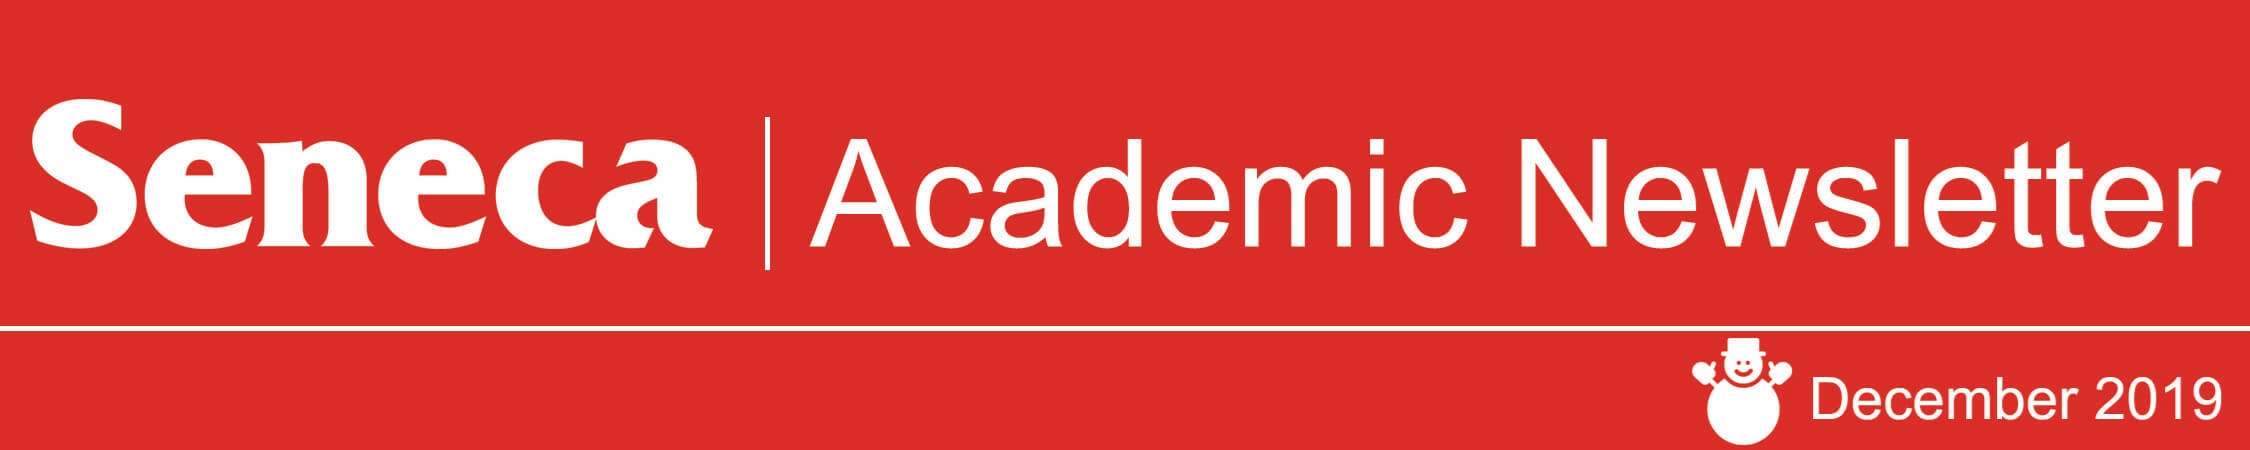 The header logo for the December 2019 issue of the Academic Newsletter